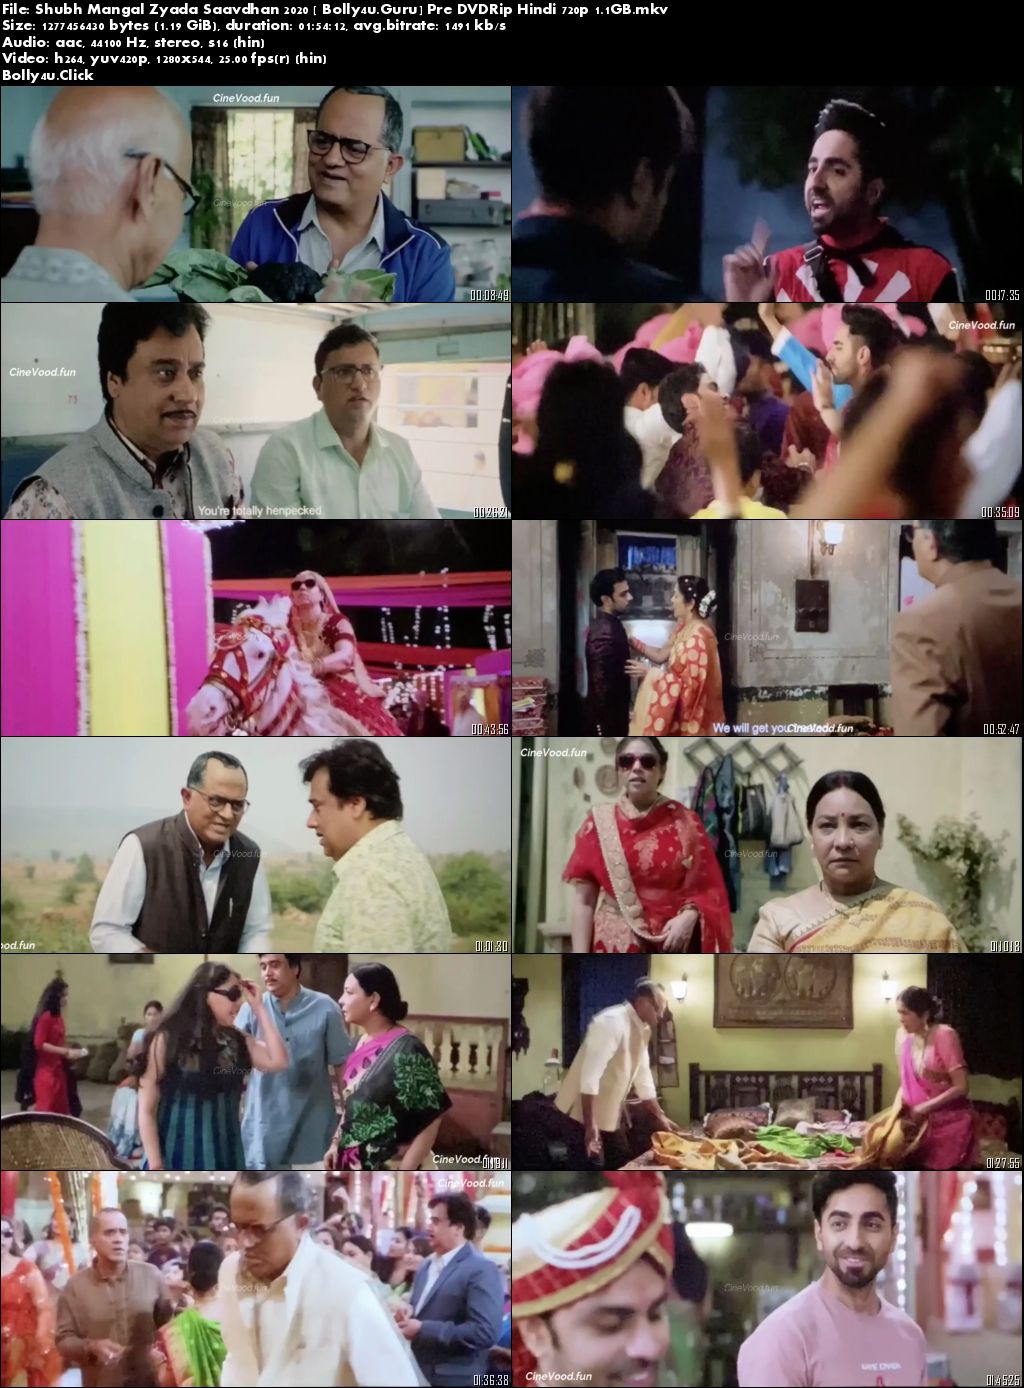 Shubh Mangal Zyada Saavdhan 2020 Pre DVDRip 1.1GB Hindi 720p Download